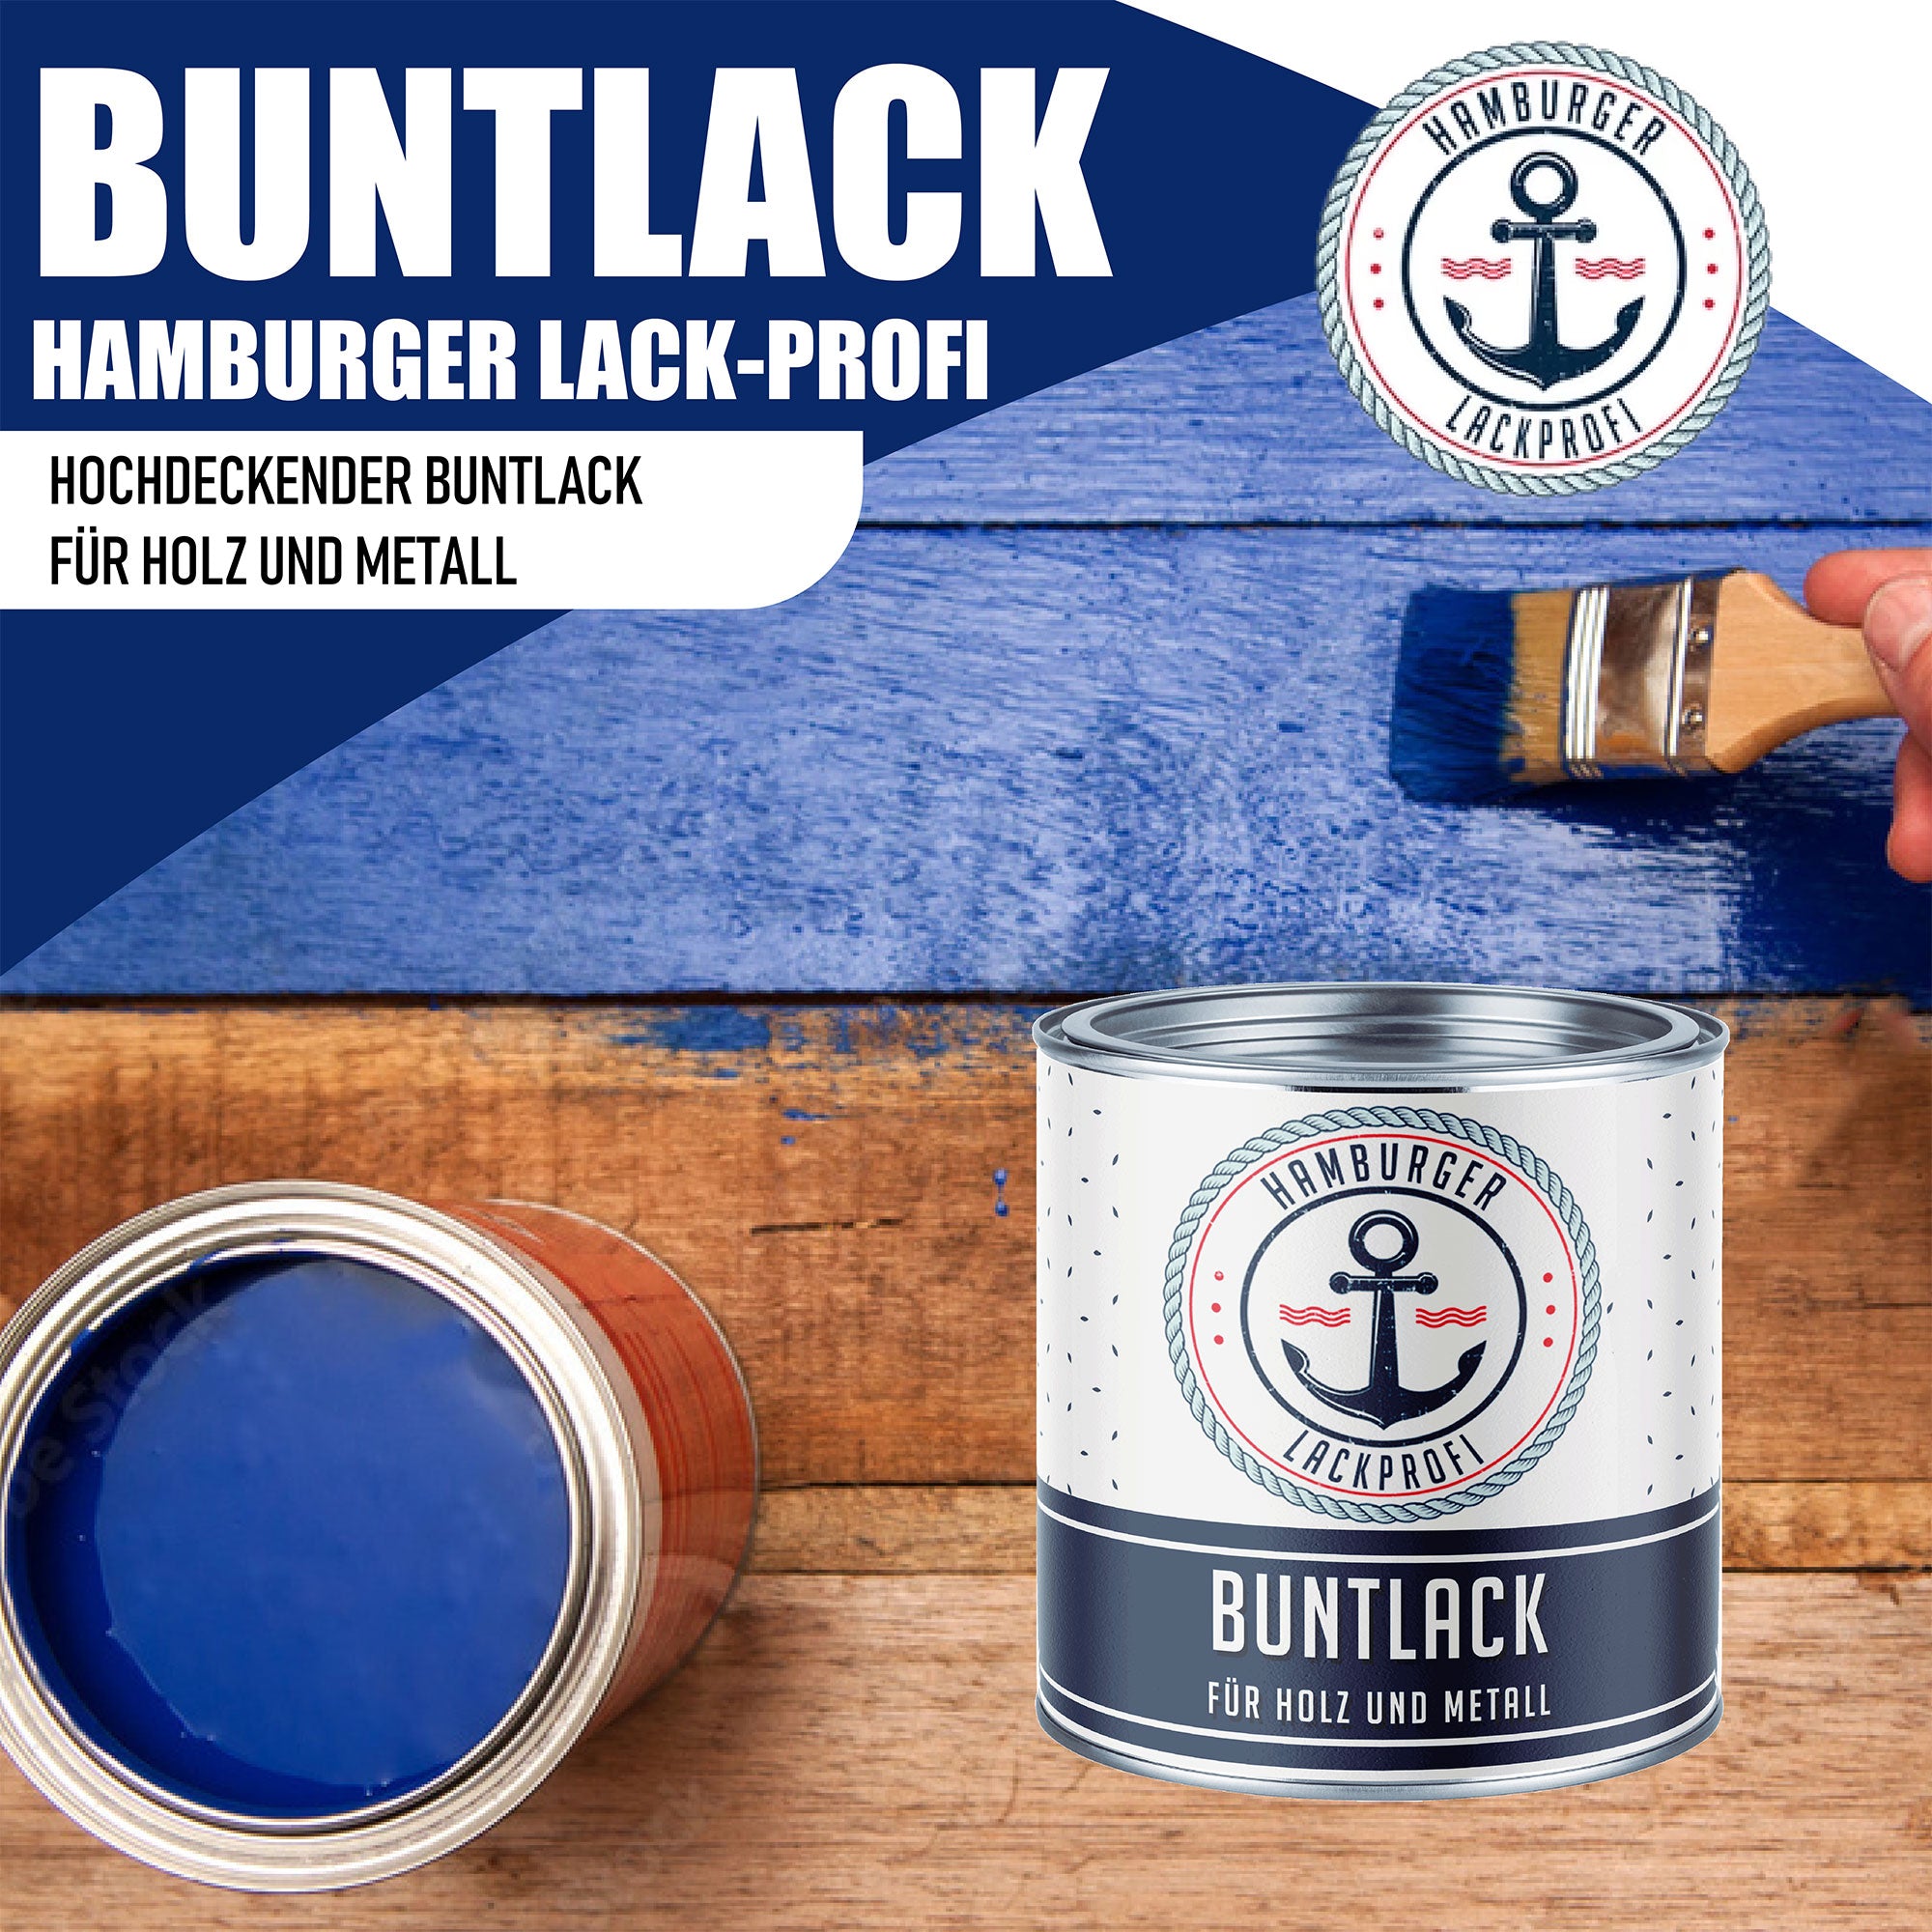 Hamburger Lack-Profi Buntlack in Signalbraun RAL 8002 mit Lackierset (X300) & Verdünnung (1 L) - 30% Sparangebot